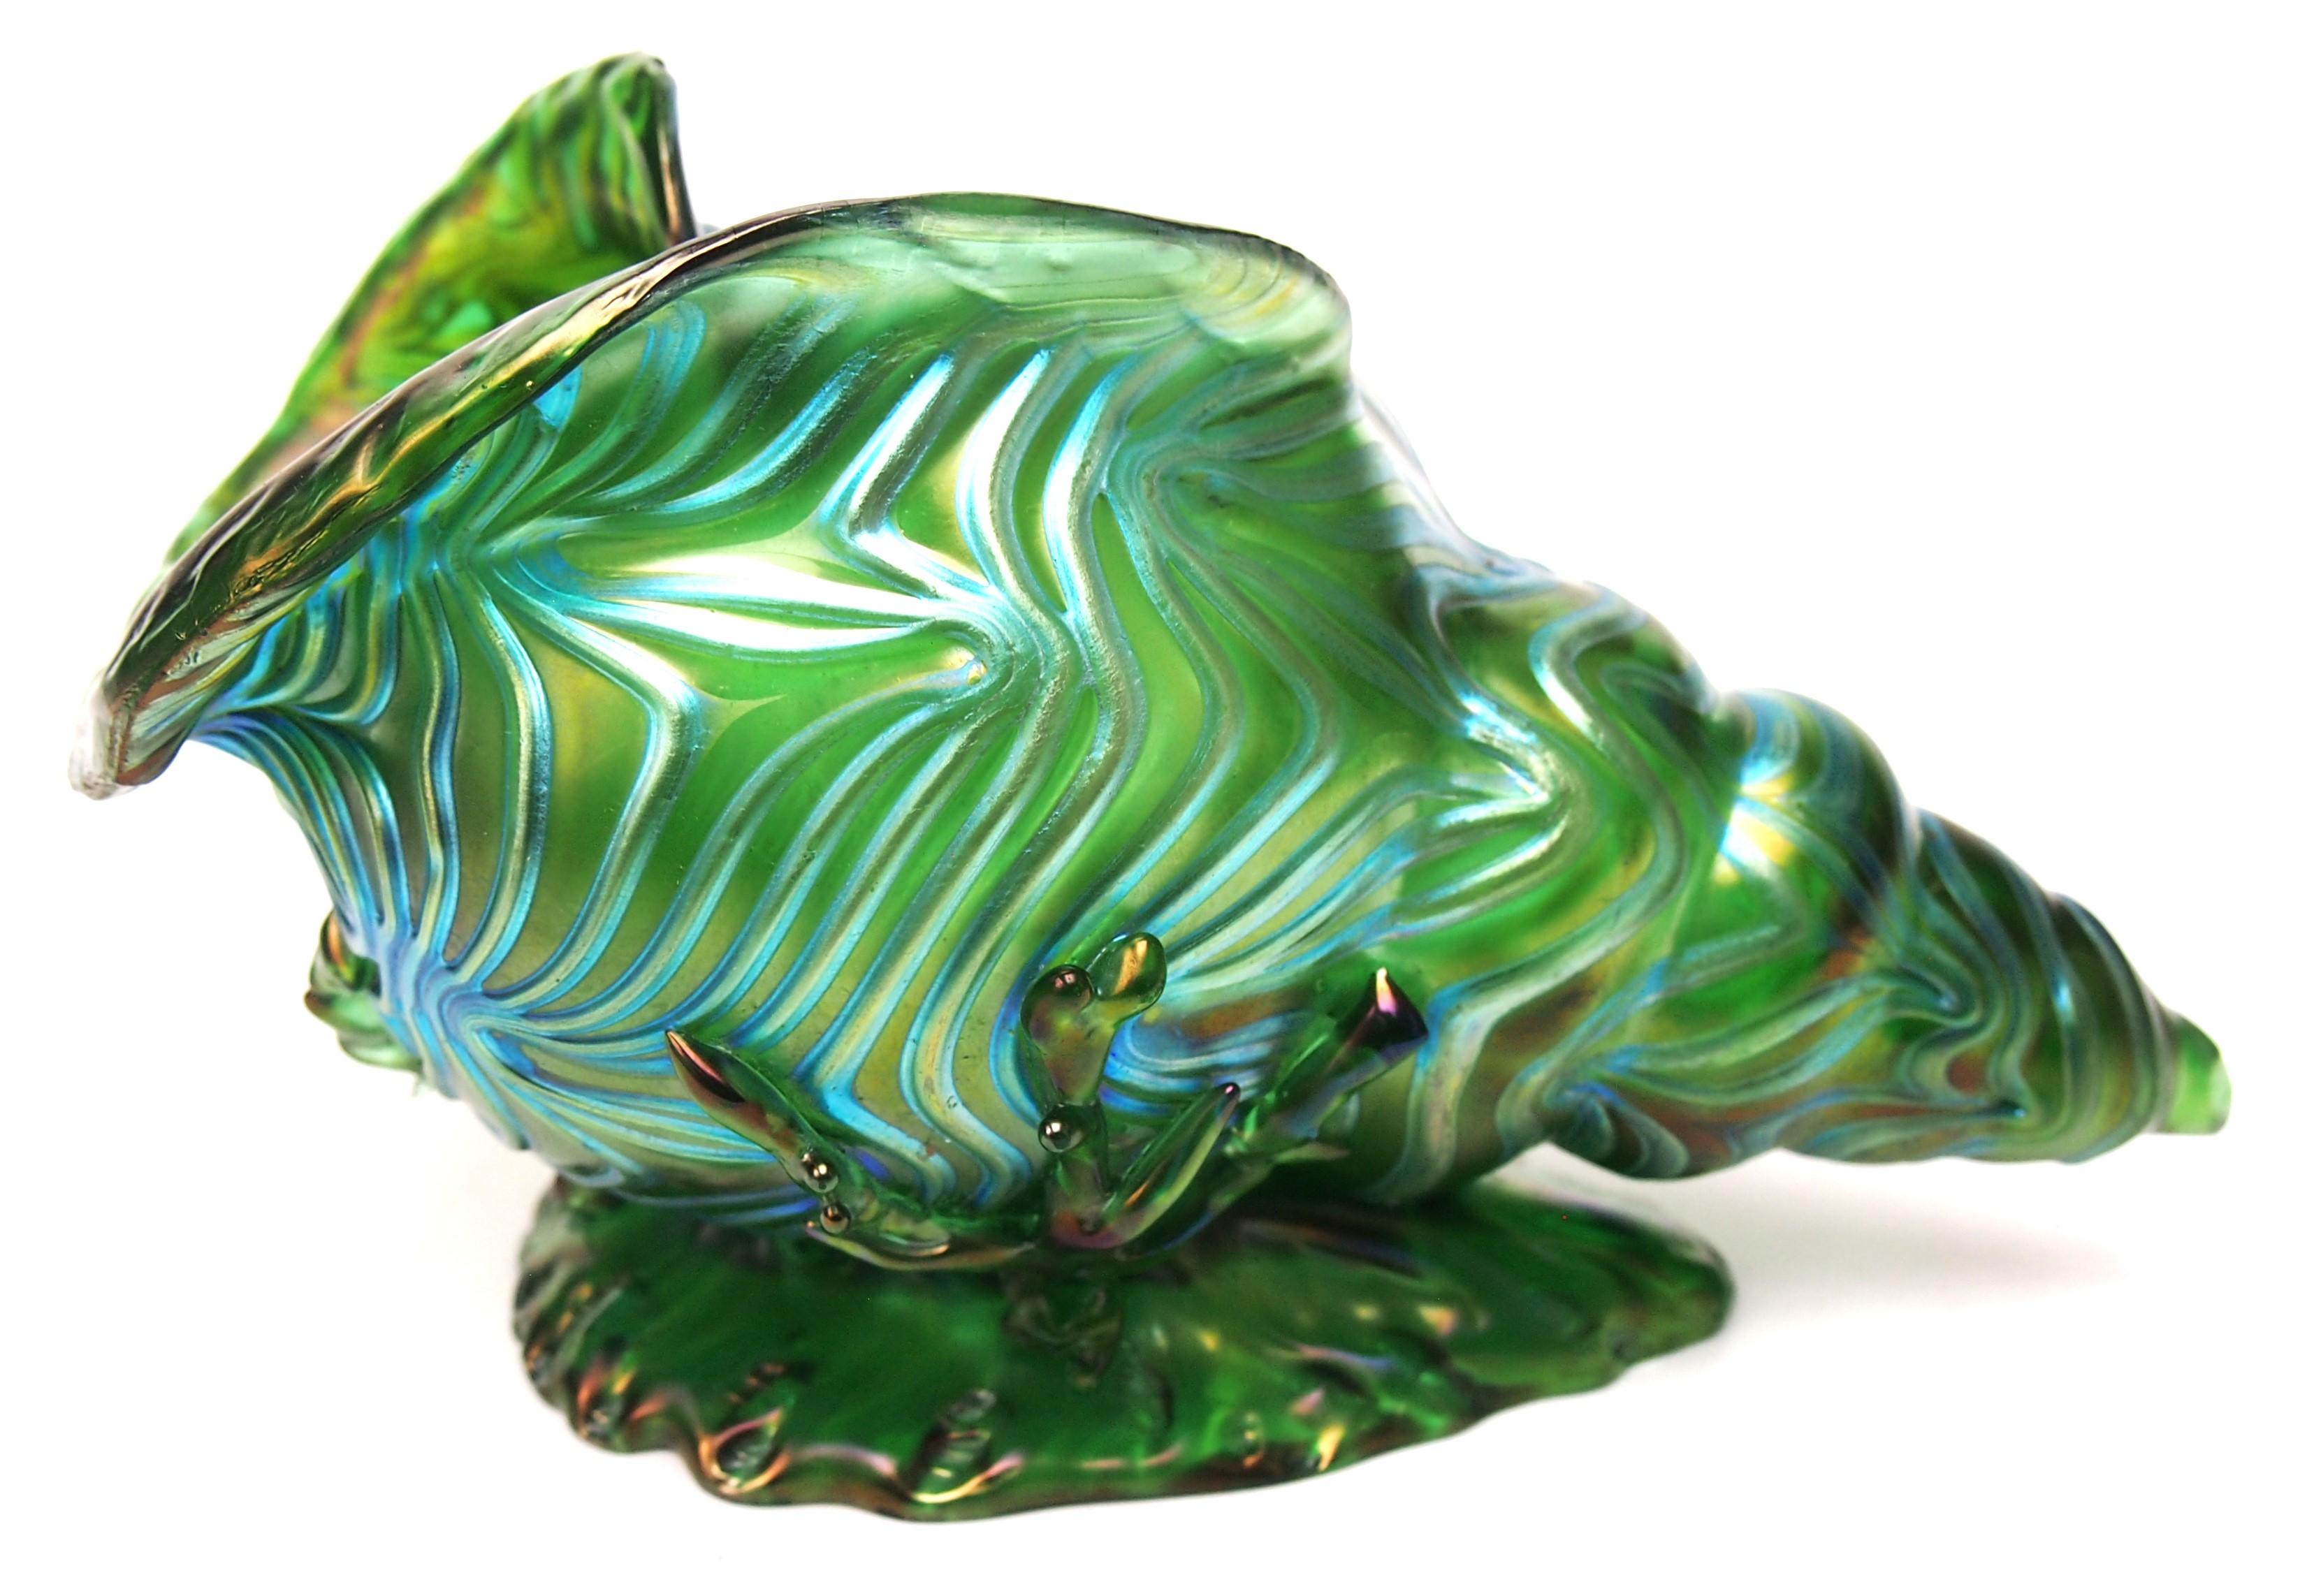 Czech Stunning Loetz Crete Formosa Glass Seashell Vase in green and blue1902 For Sale